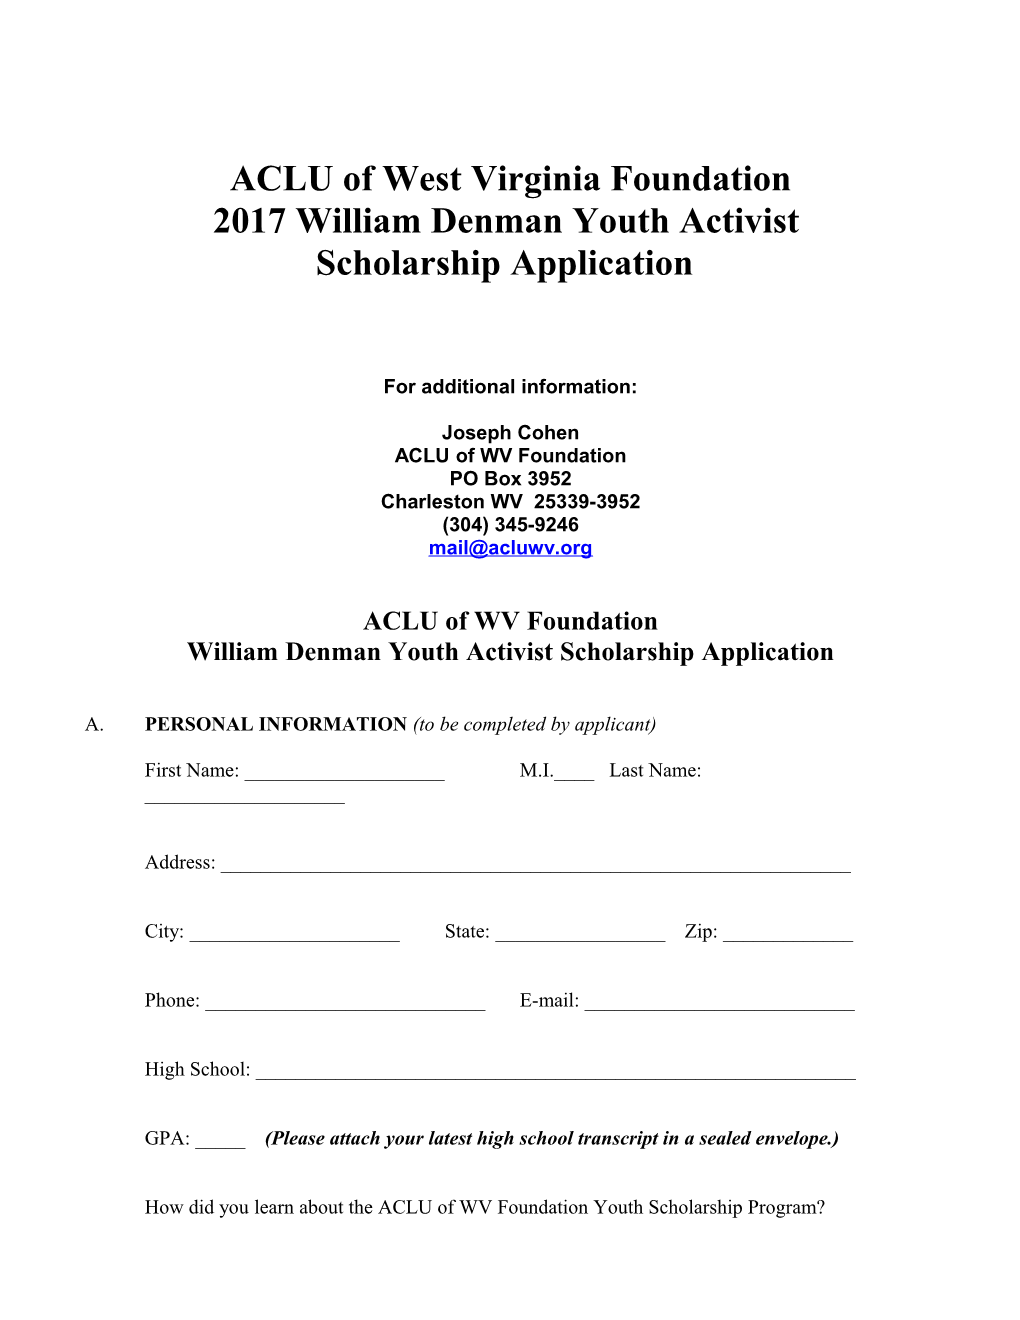 ACLU Student Activist Scholarship Program 2009: Application Forms